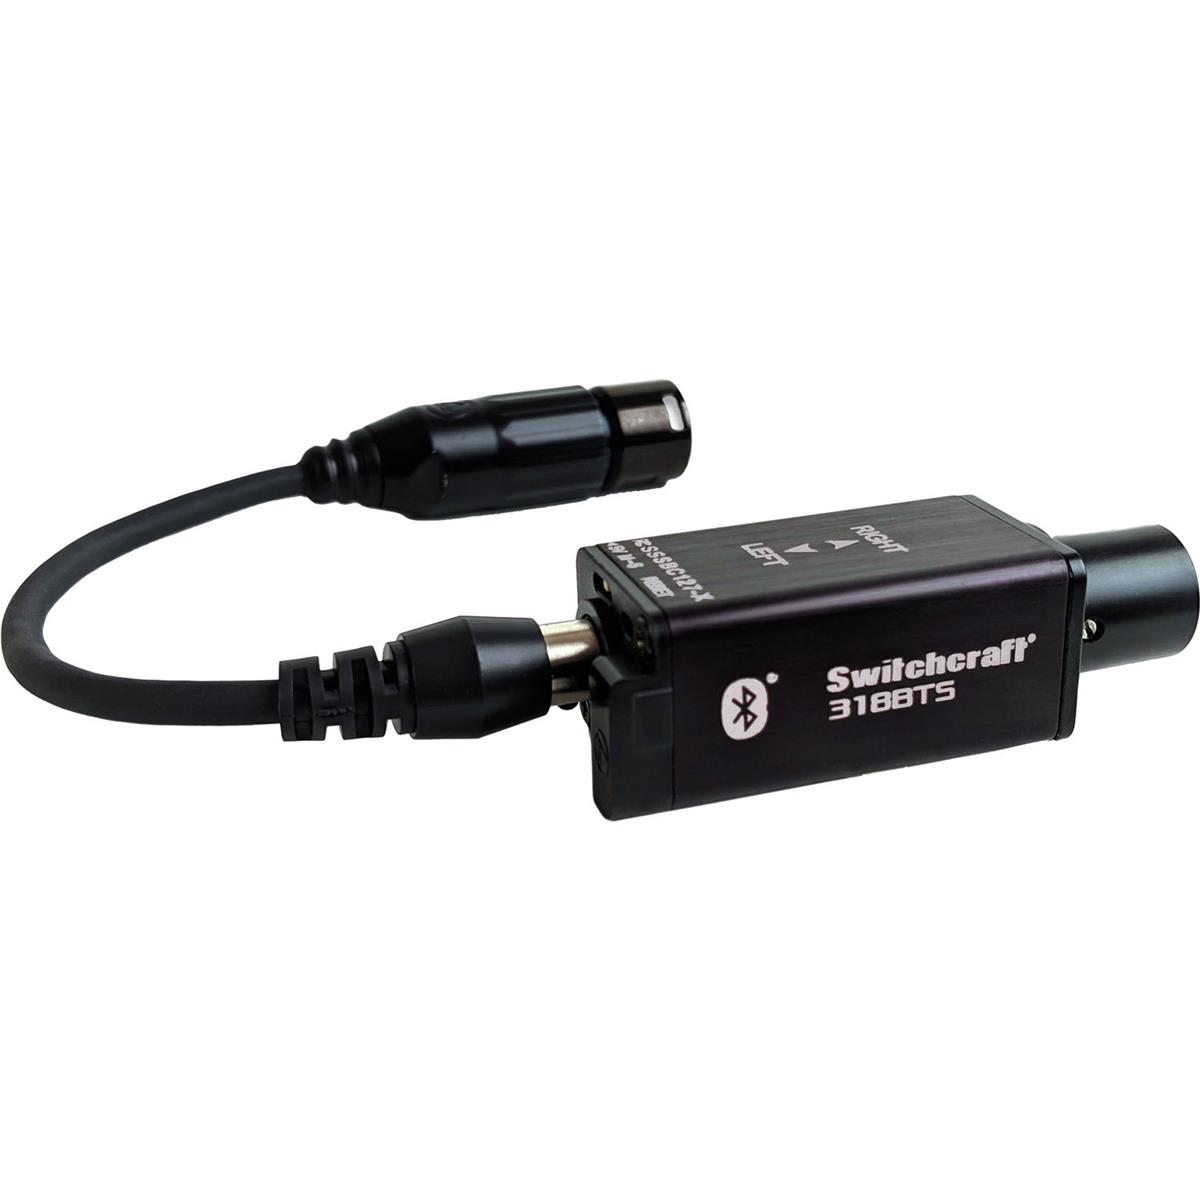 Image of Switchcraft Audiostix 318BTS Phantom-Powered Bluetooth Stereo Audio Receiver